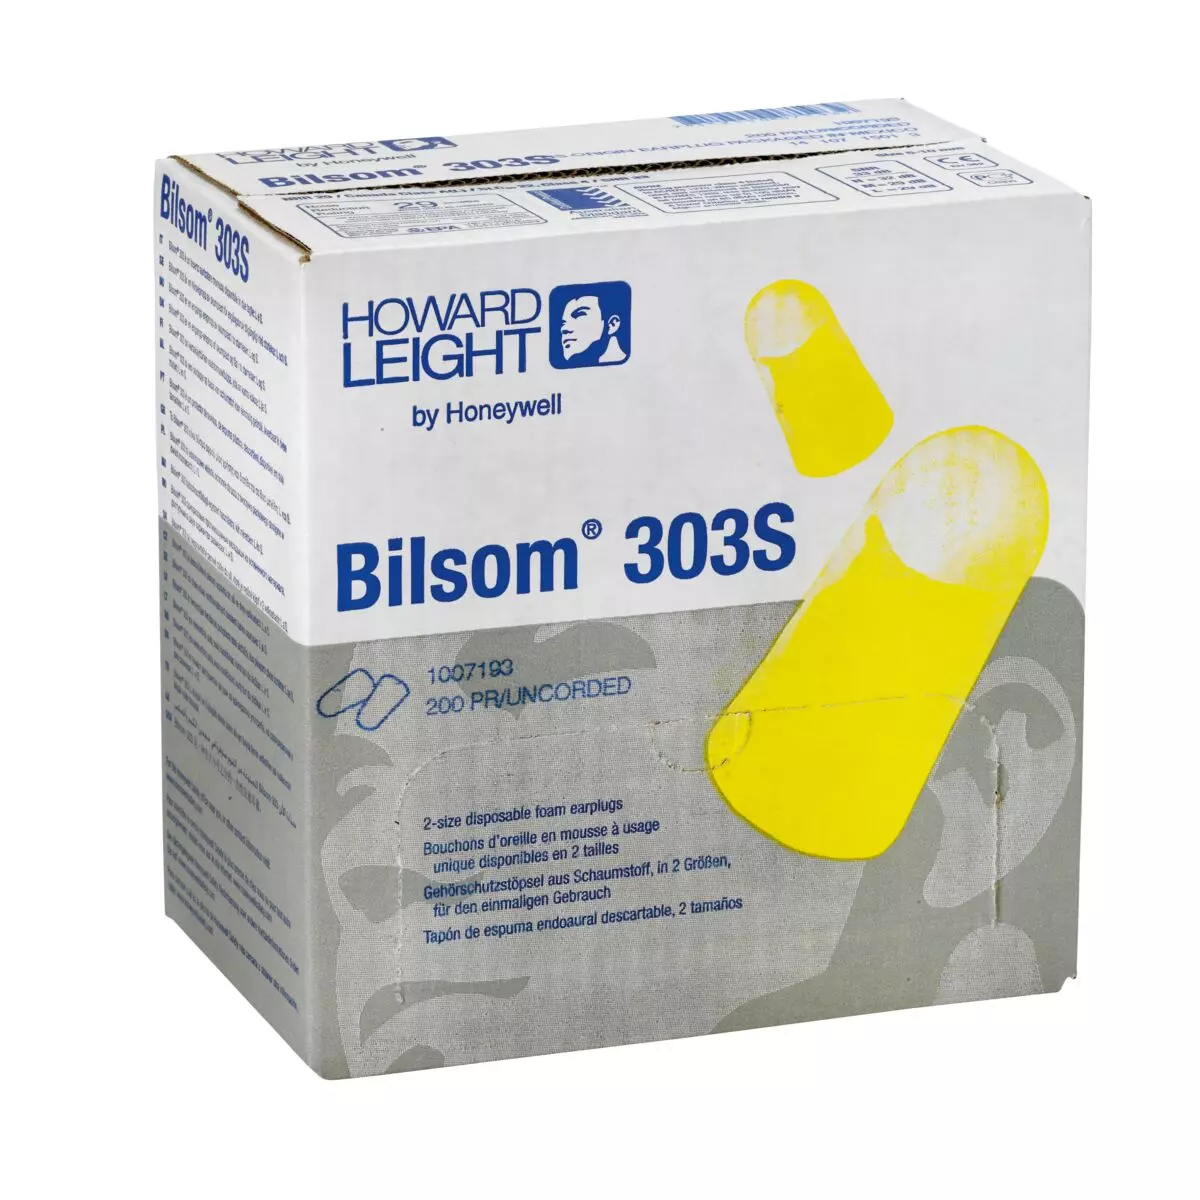 Pocket pack of Bilsom 303 earplugs in a distribution box - S